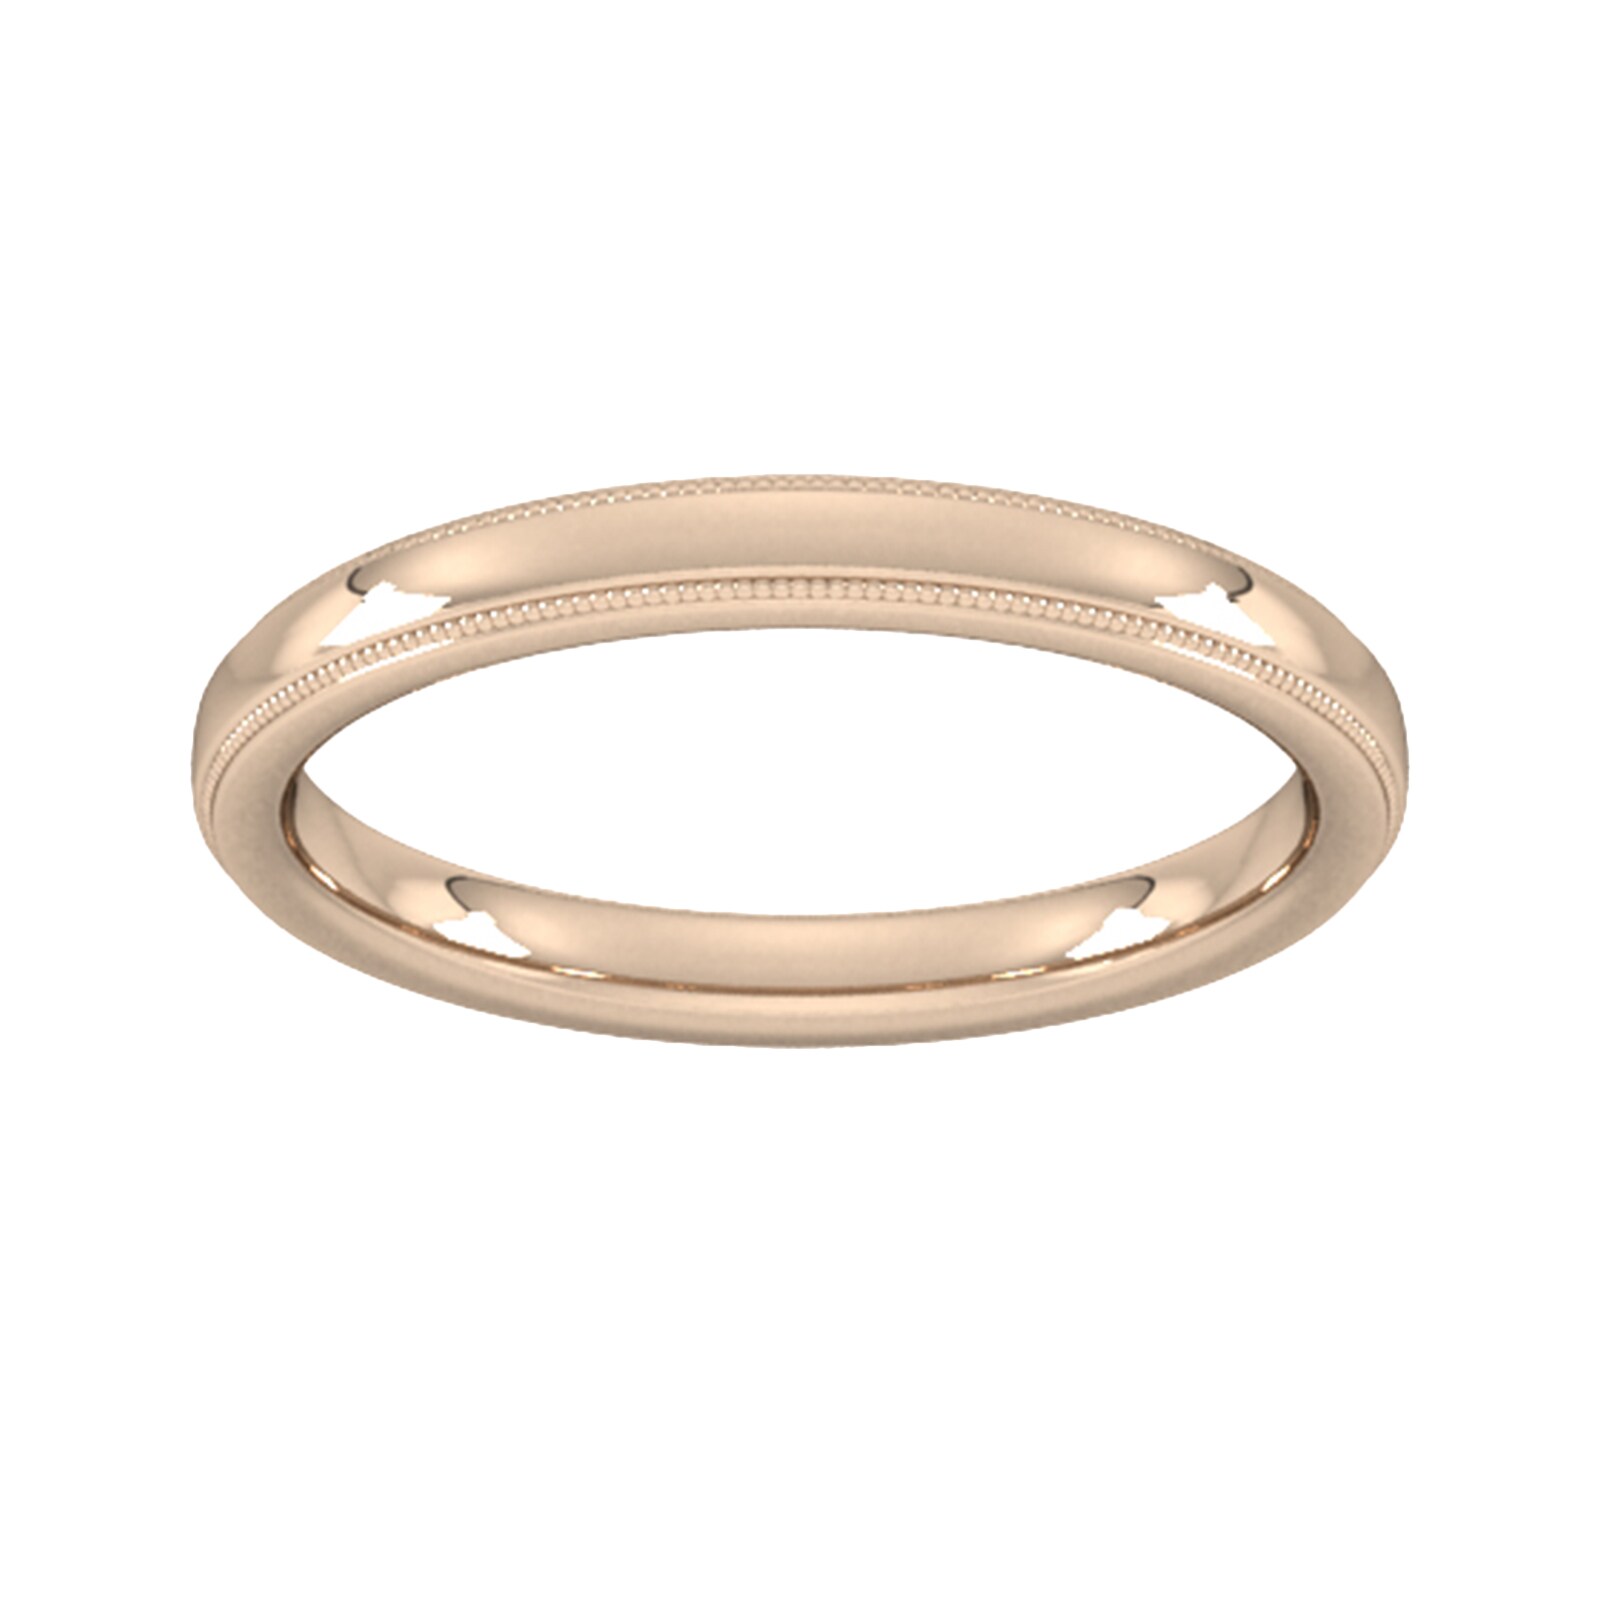 2.5mm Slight Court Extra Heavy Milgrain Edge Wedding Ring In 18 Carat Rose Gold - Ring Size N